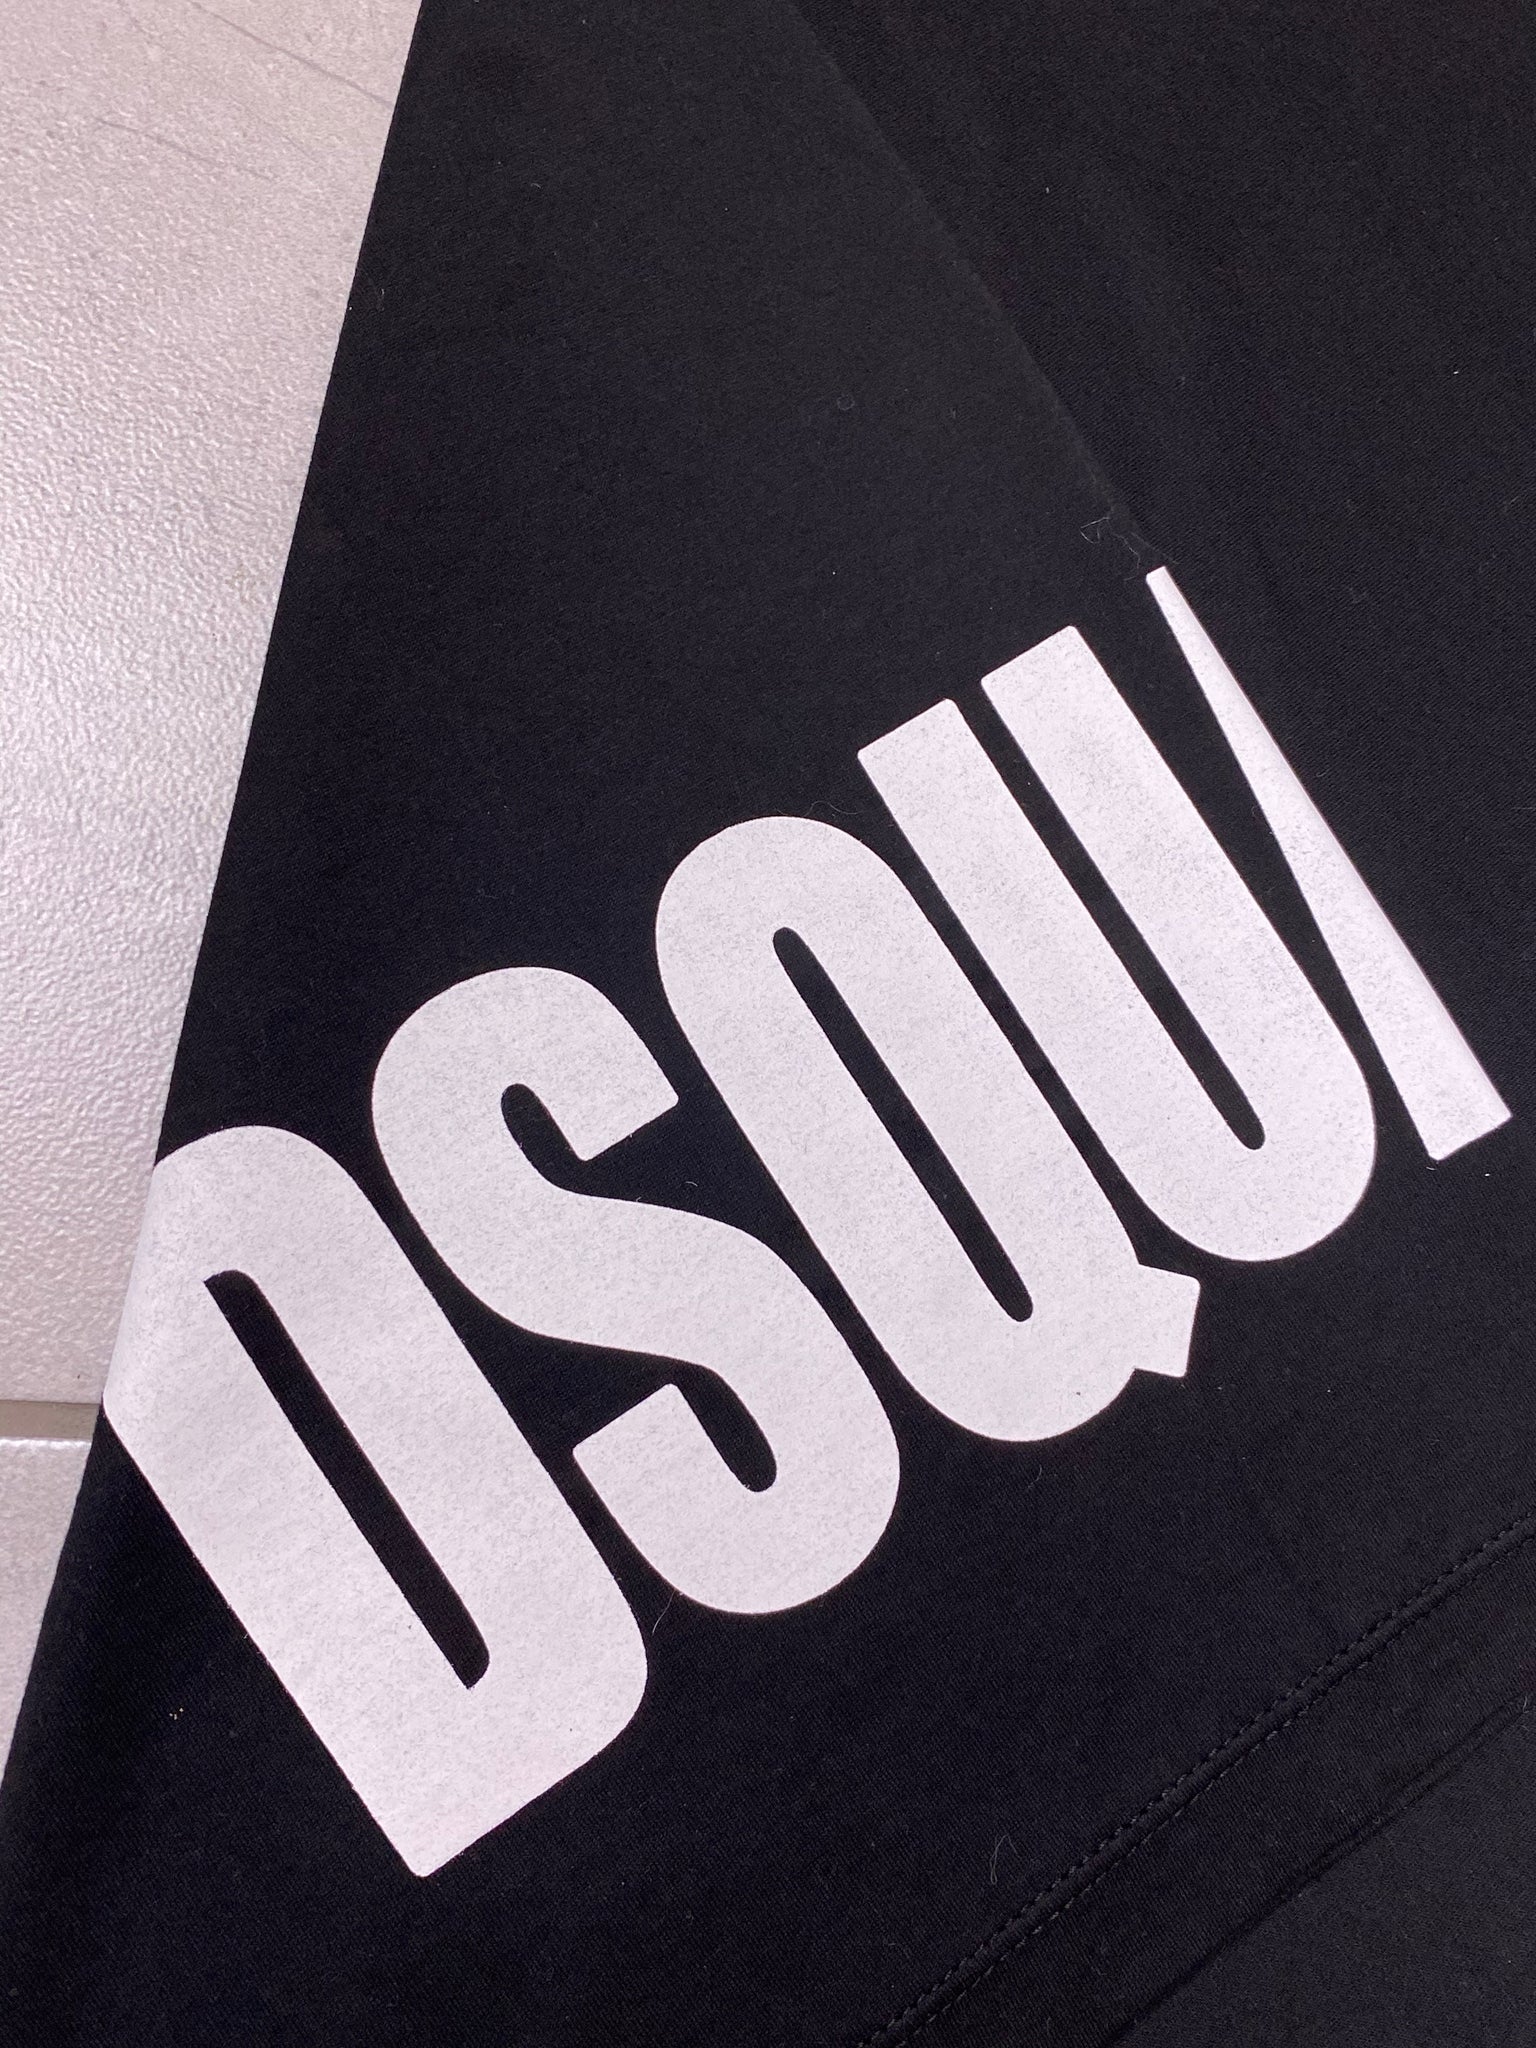 Men’s Dsquared2 Side Logo T-Shirt